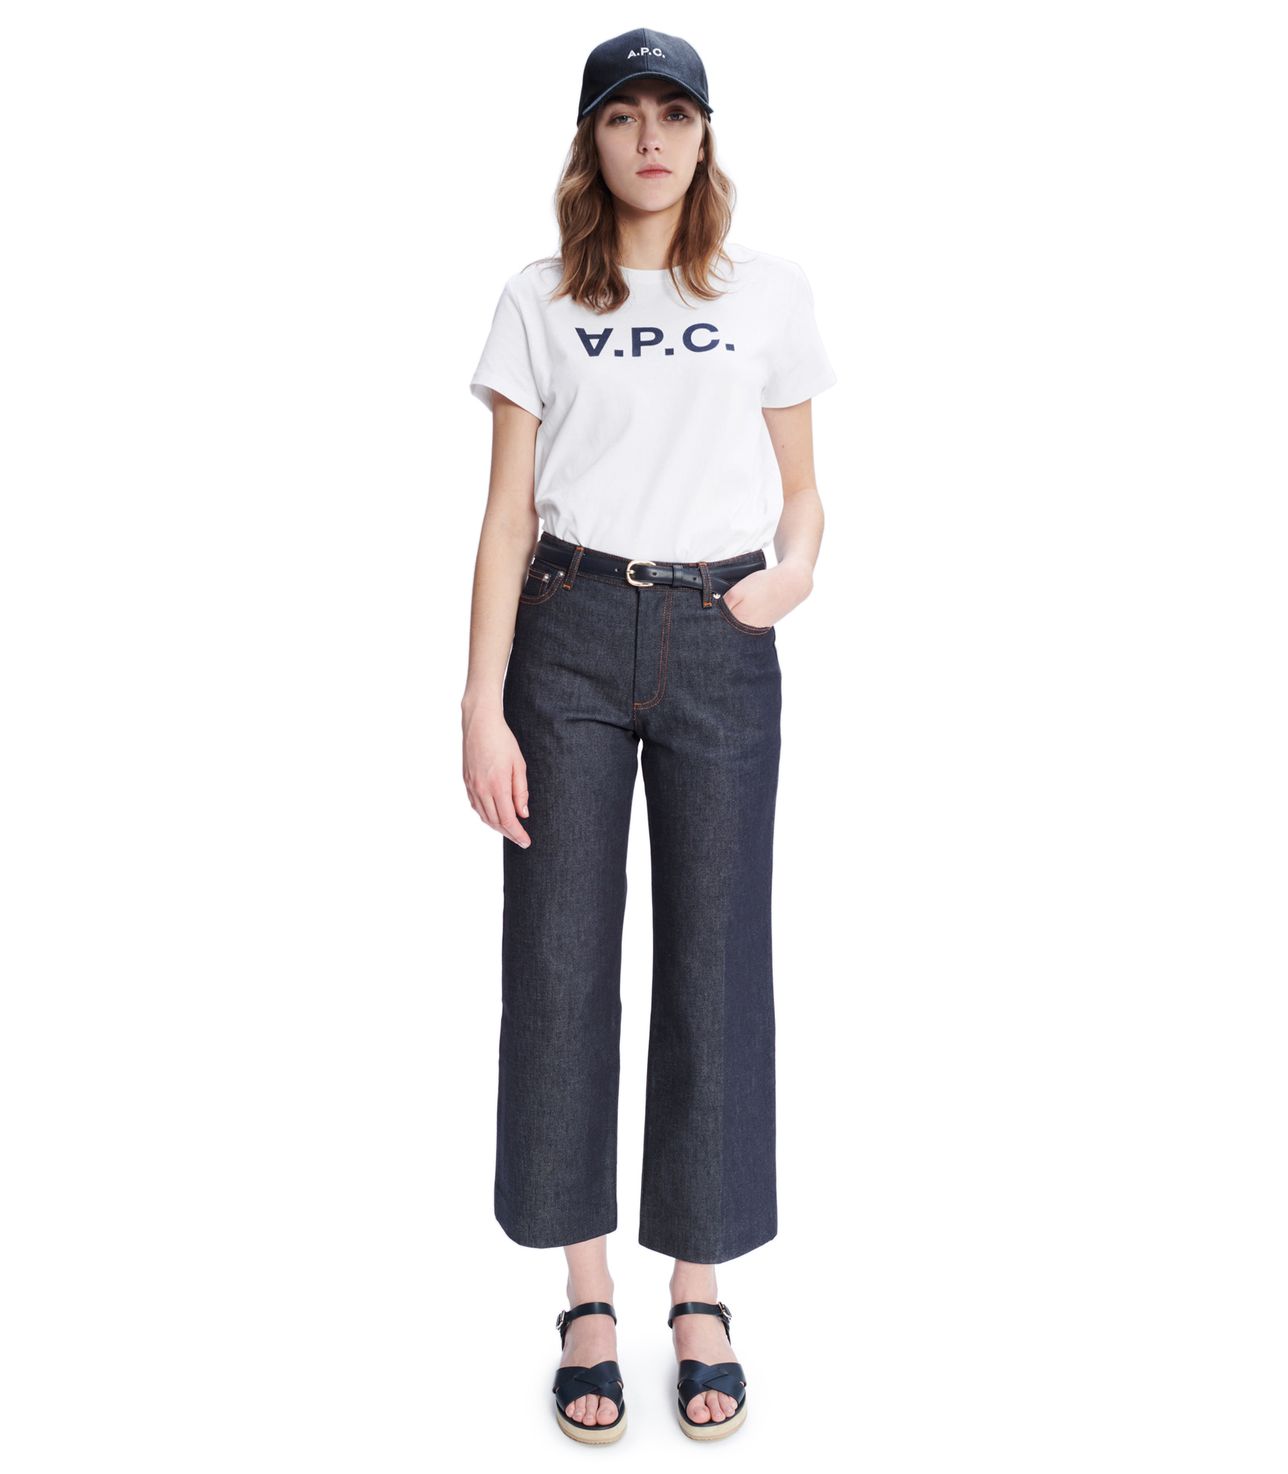 VPC Blanc F T-shirt DARK NAVY BLUE APC